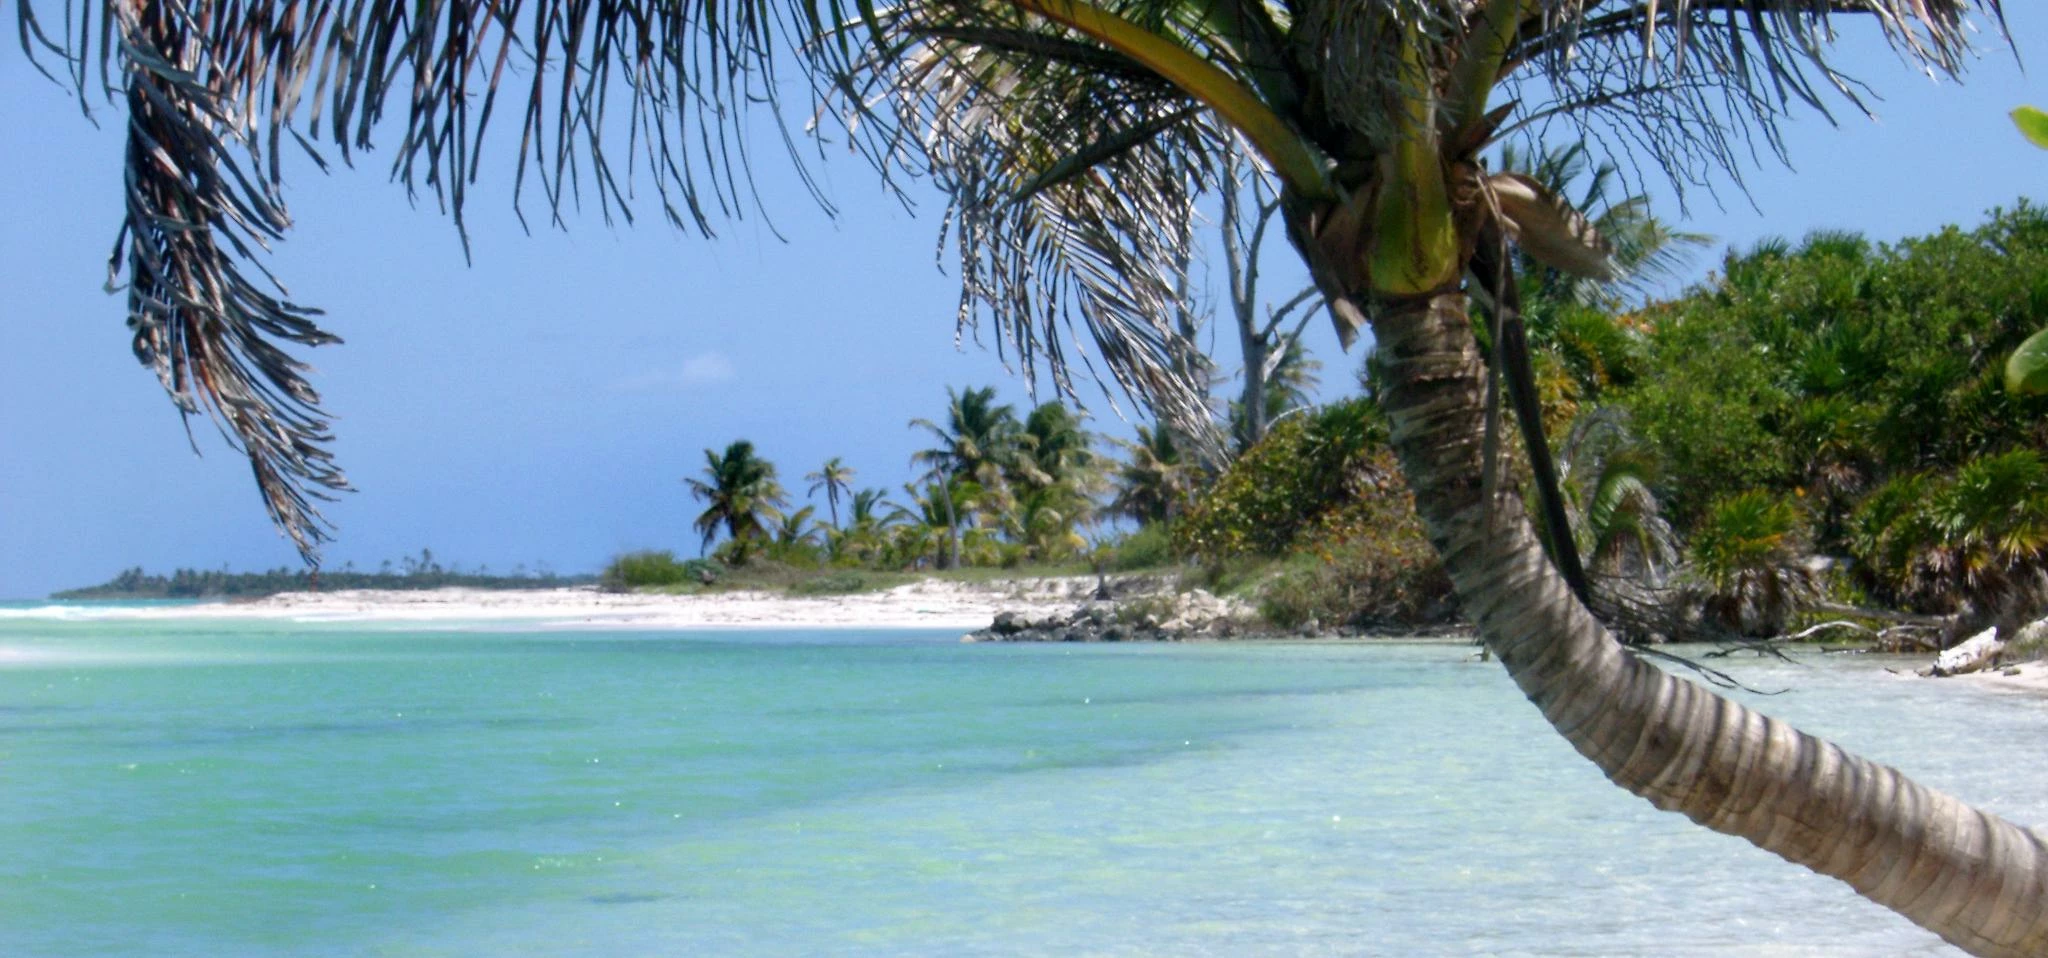 Idyllic tropical beach and palm tree